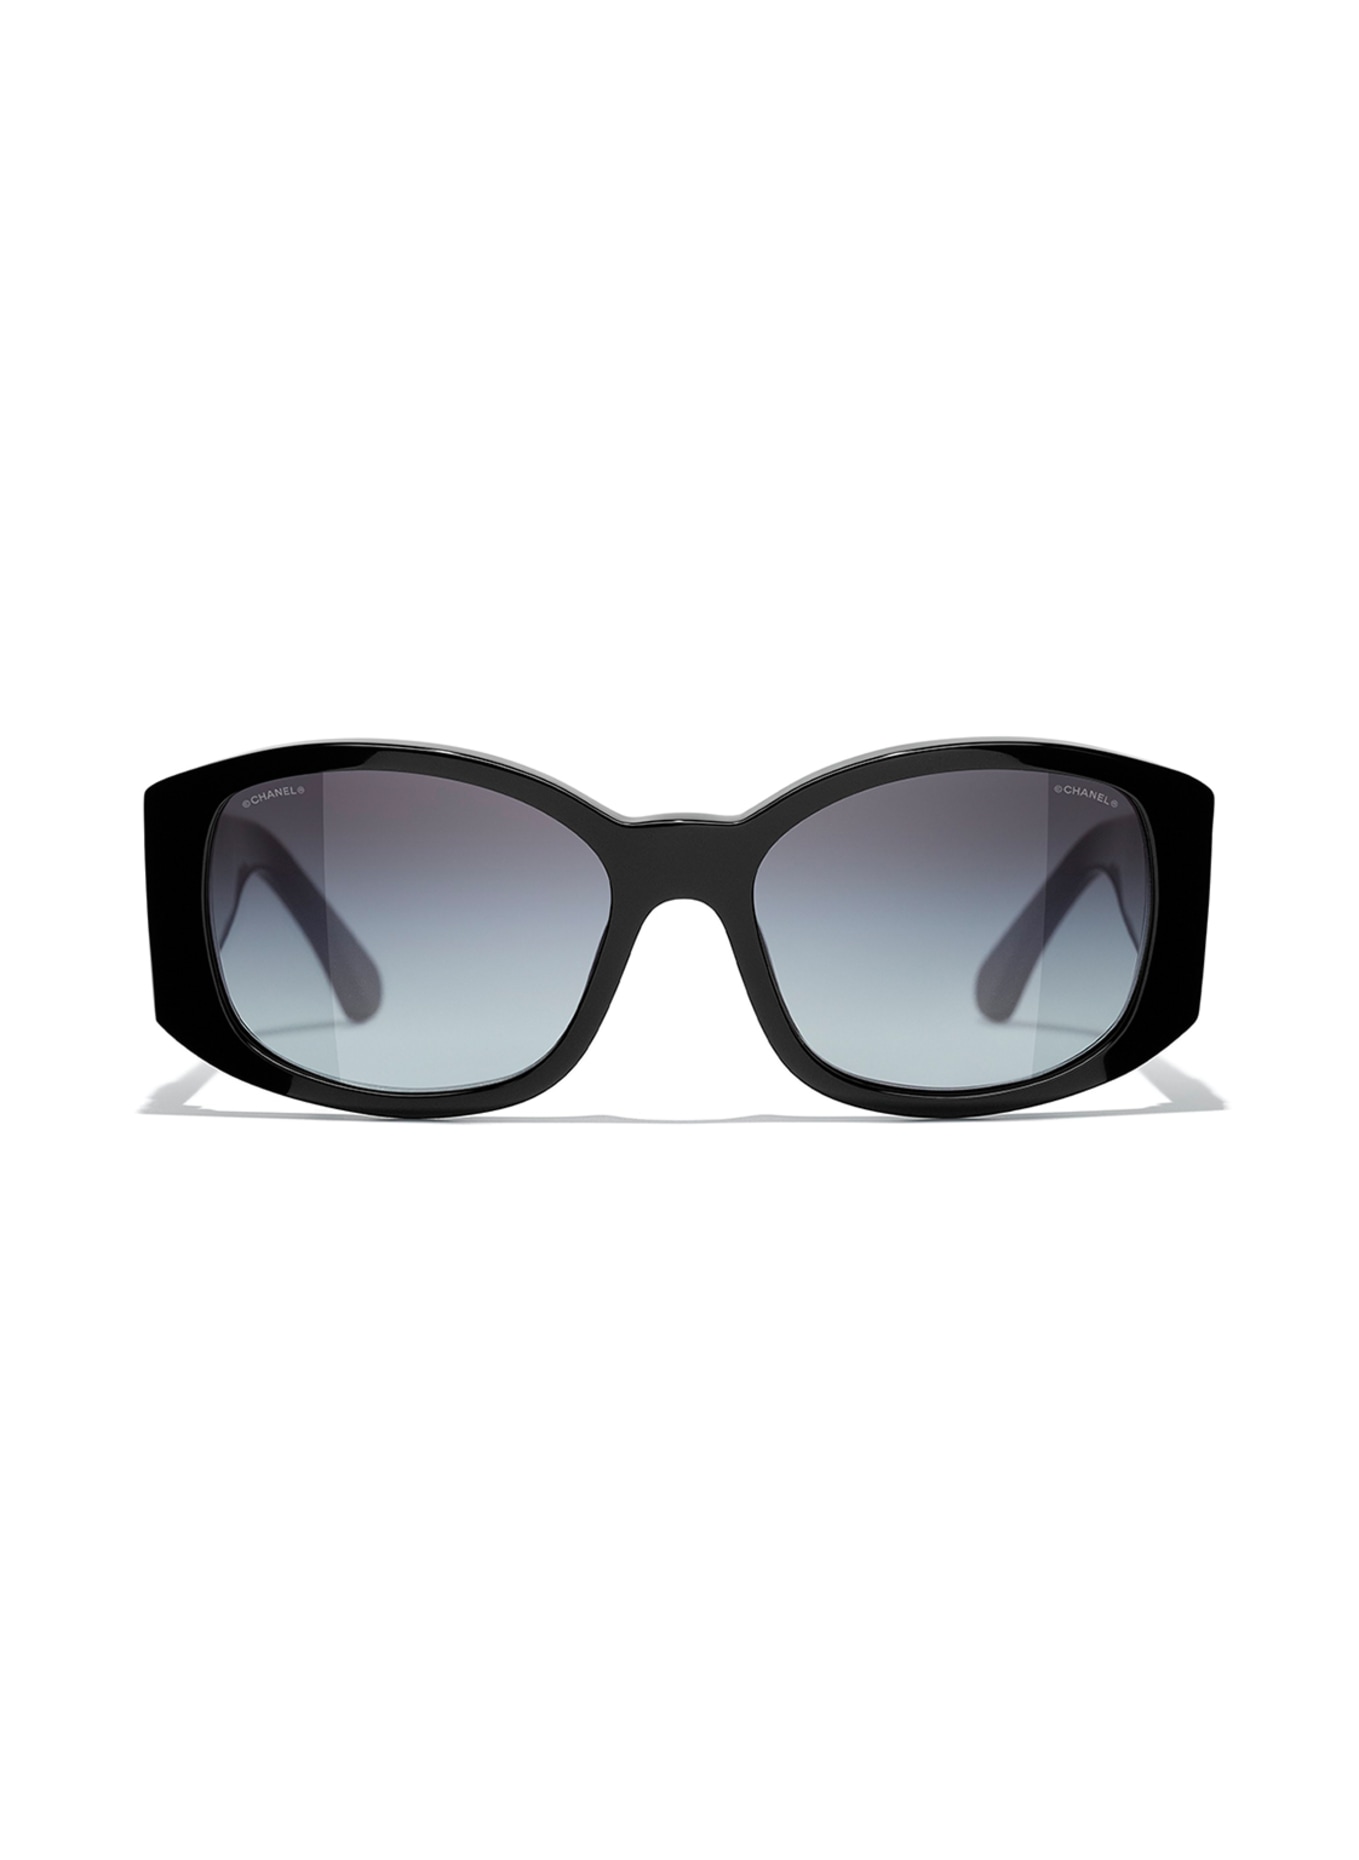 CHANEL 1506-T c.1434 Eyewear FRAMES Eyeglasses RX Optical Glasses New BNIB  Italy - GGV Eyewear